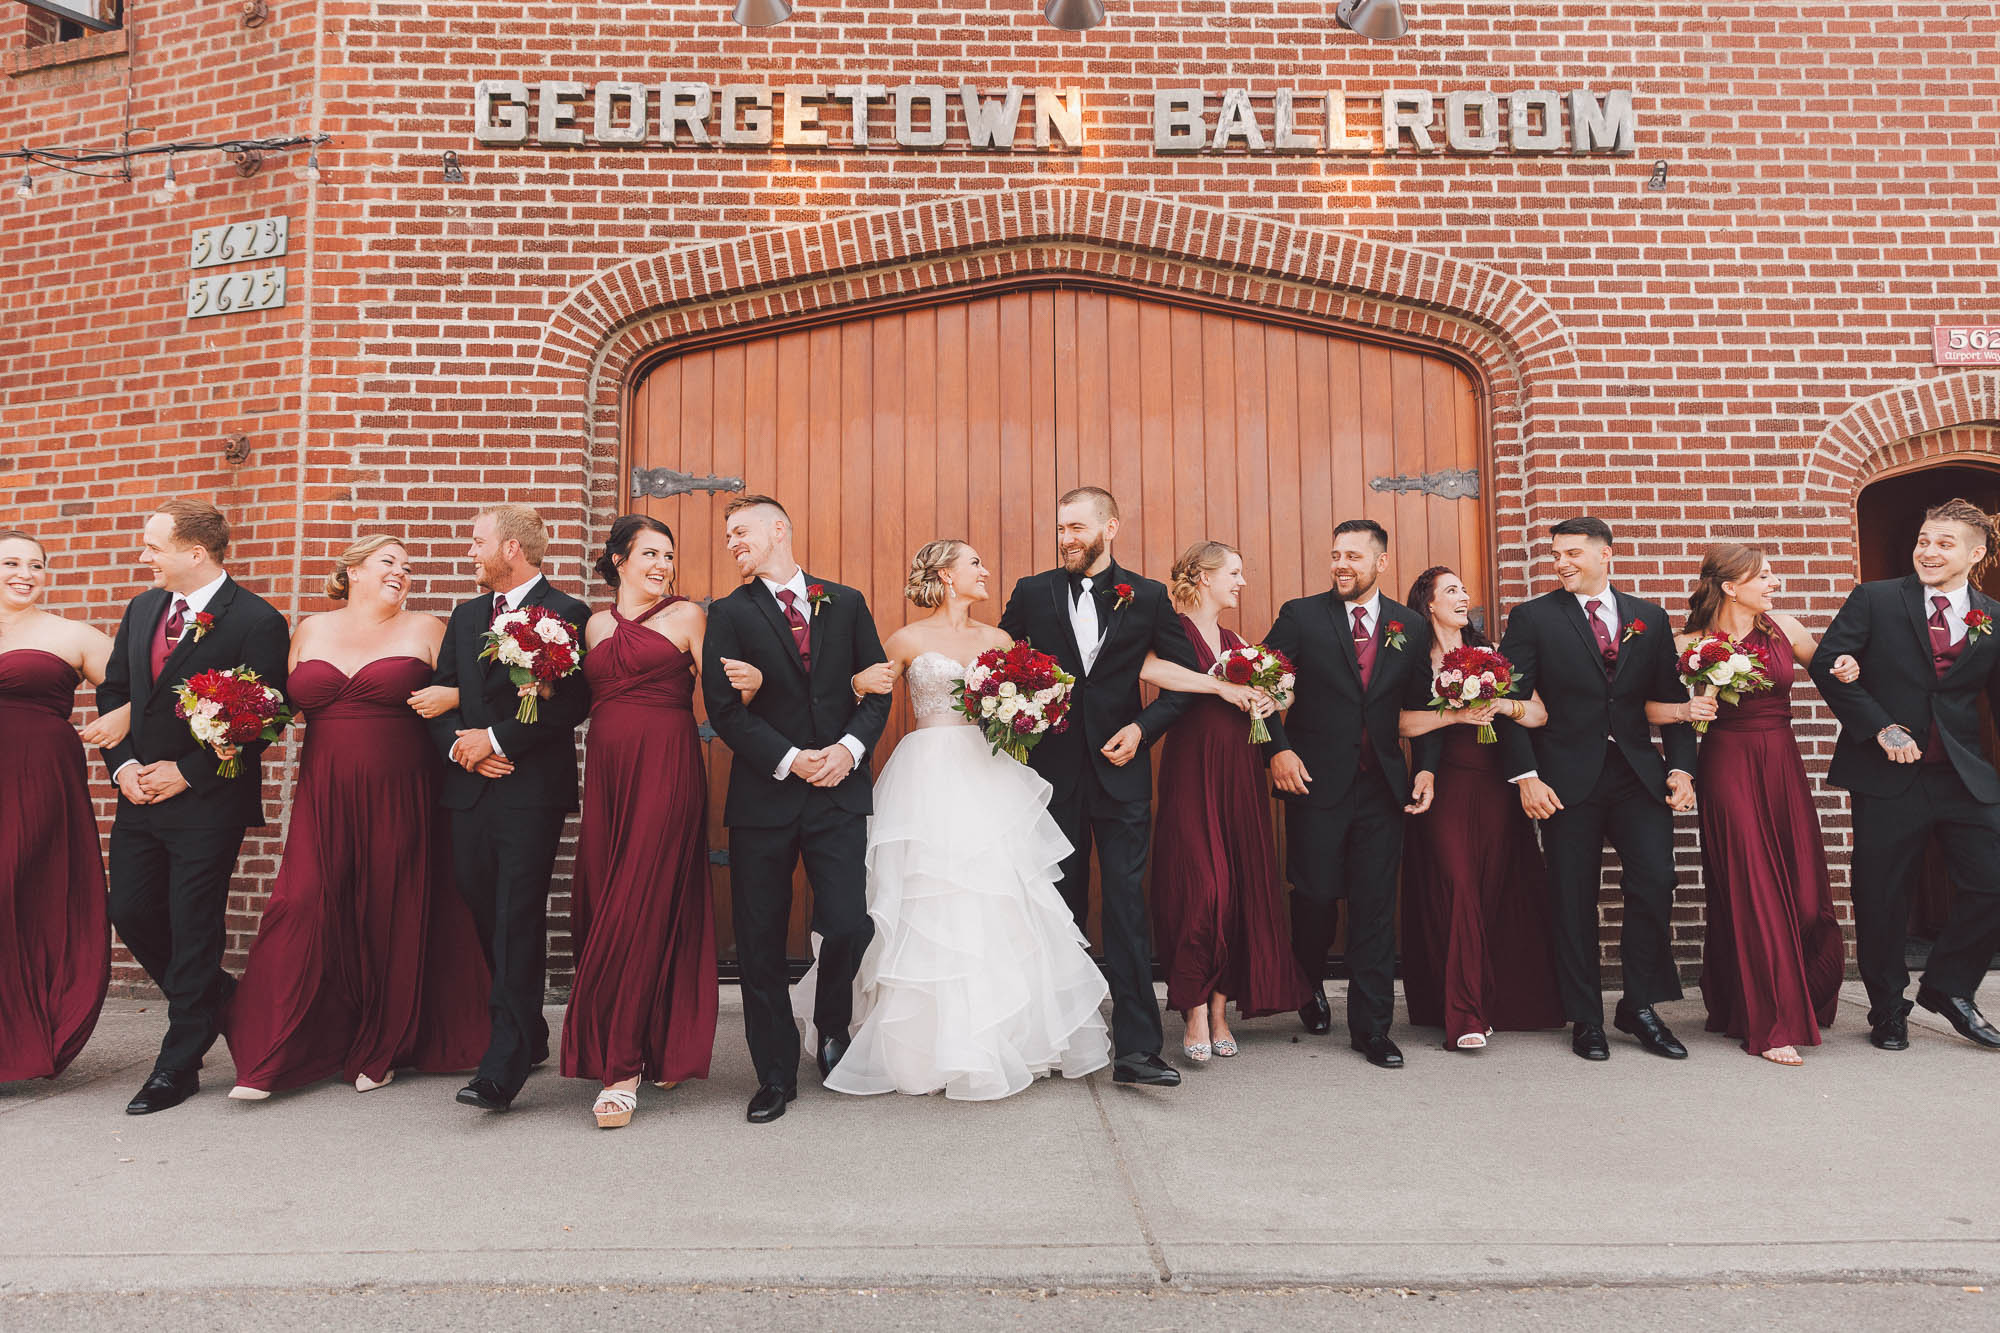 Georgetown Ballroom brick wedding venue in Seattle, Washington by Luma Weddings